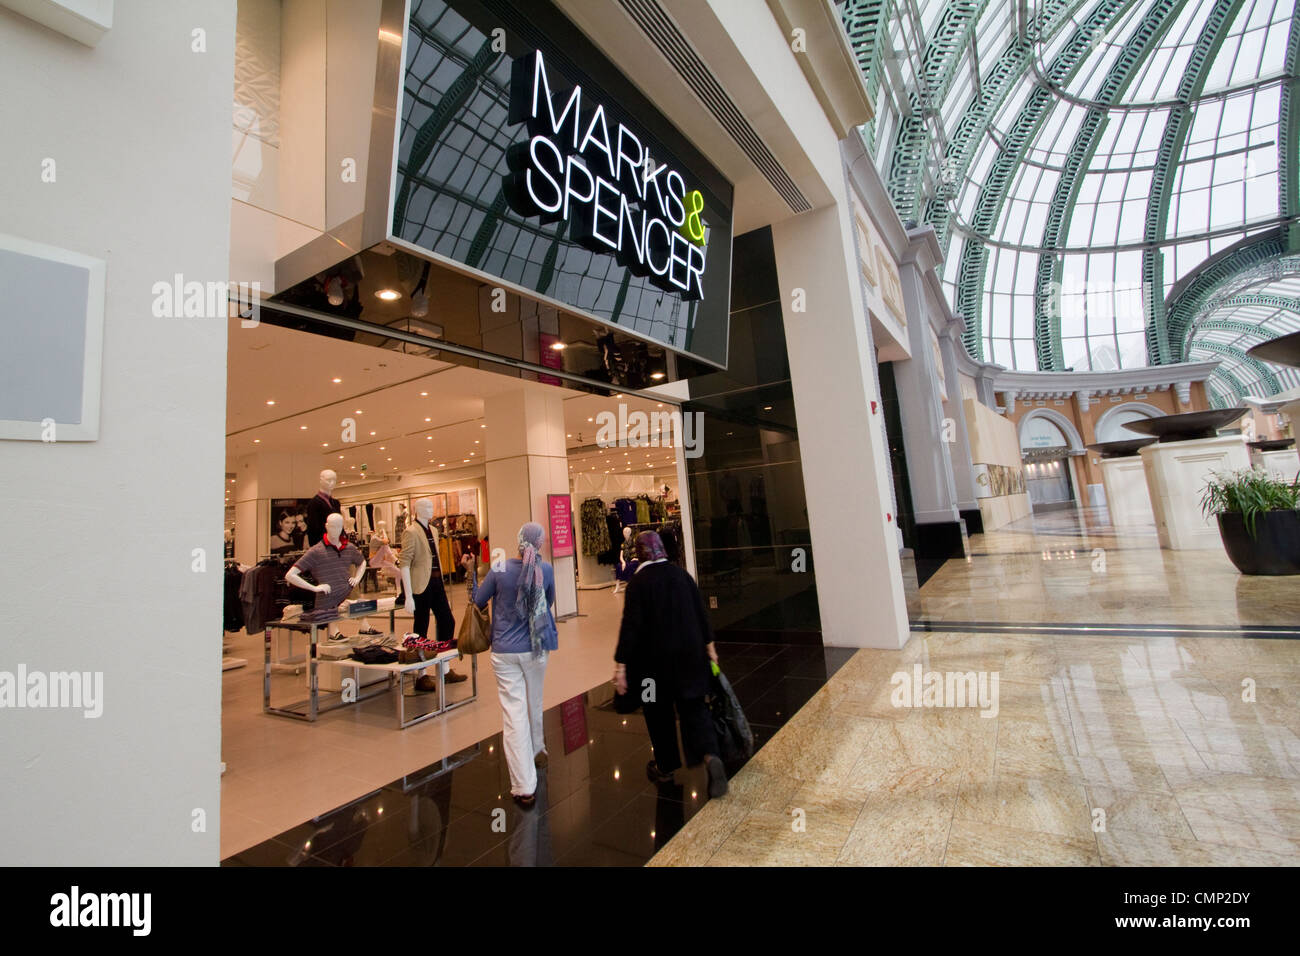 Los emiratos árabes unidos, Dubai Mall de los emiratos, Marks & Spencer  Fotografía de stock - Alamy